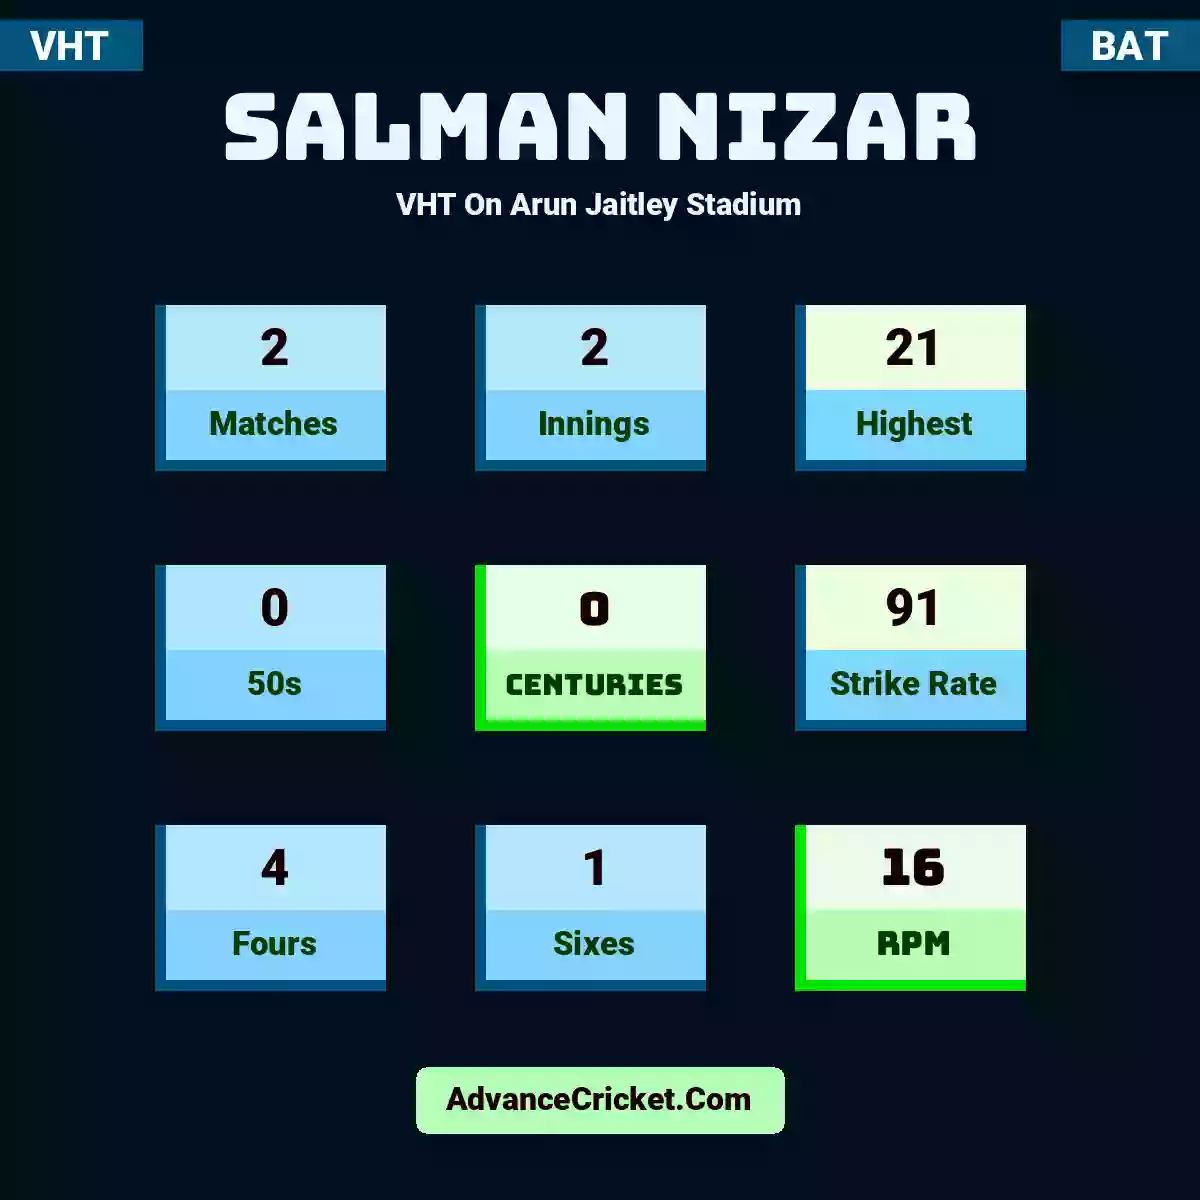 Salman Nizar VHT  On Arun Jaitley Stadium, Salman Nizar played 2 matches, scored 21 runs as highest, 0 half-centuries, and 0 centuries, with a strike rate of 91. S.Nizar hit 4 fours and 1 sixes, with an RPM of 16.